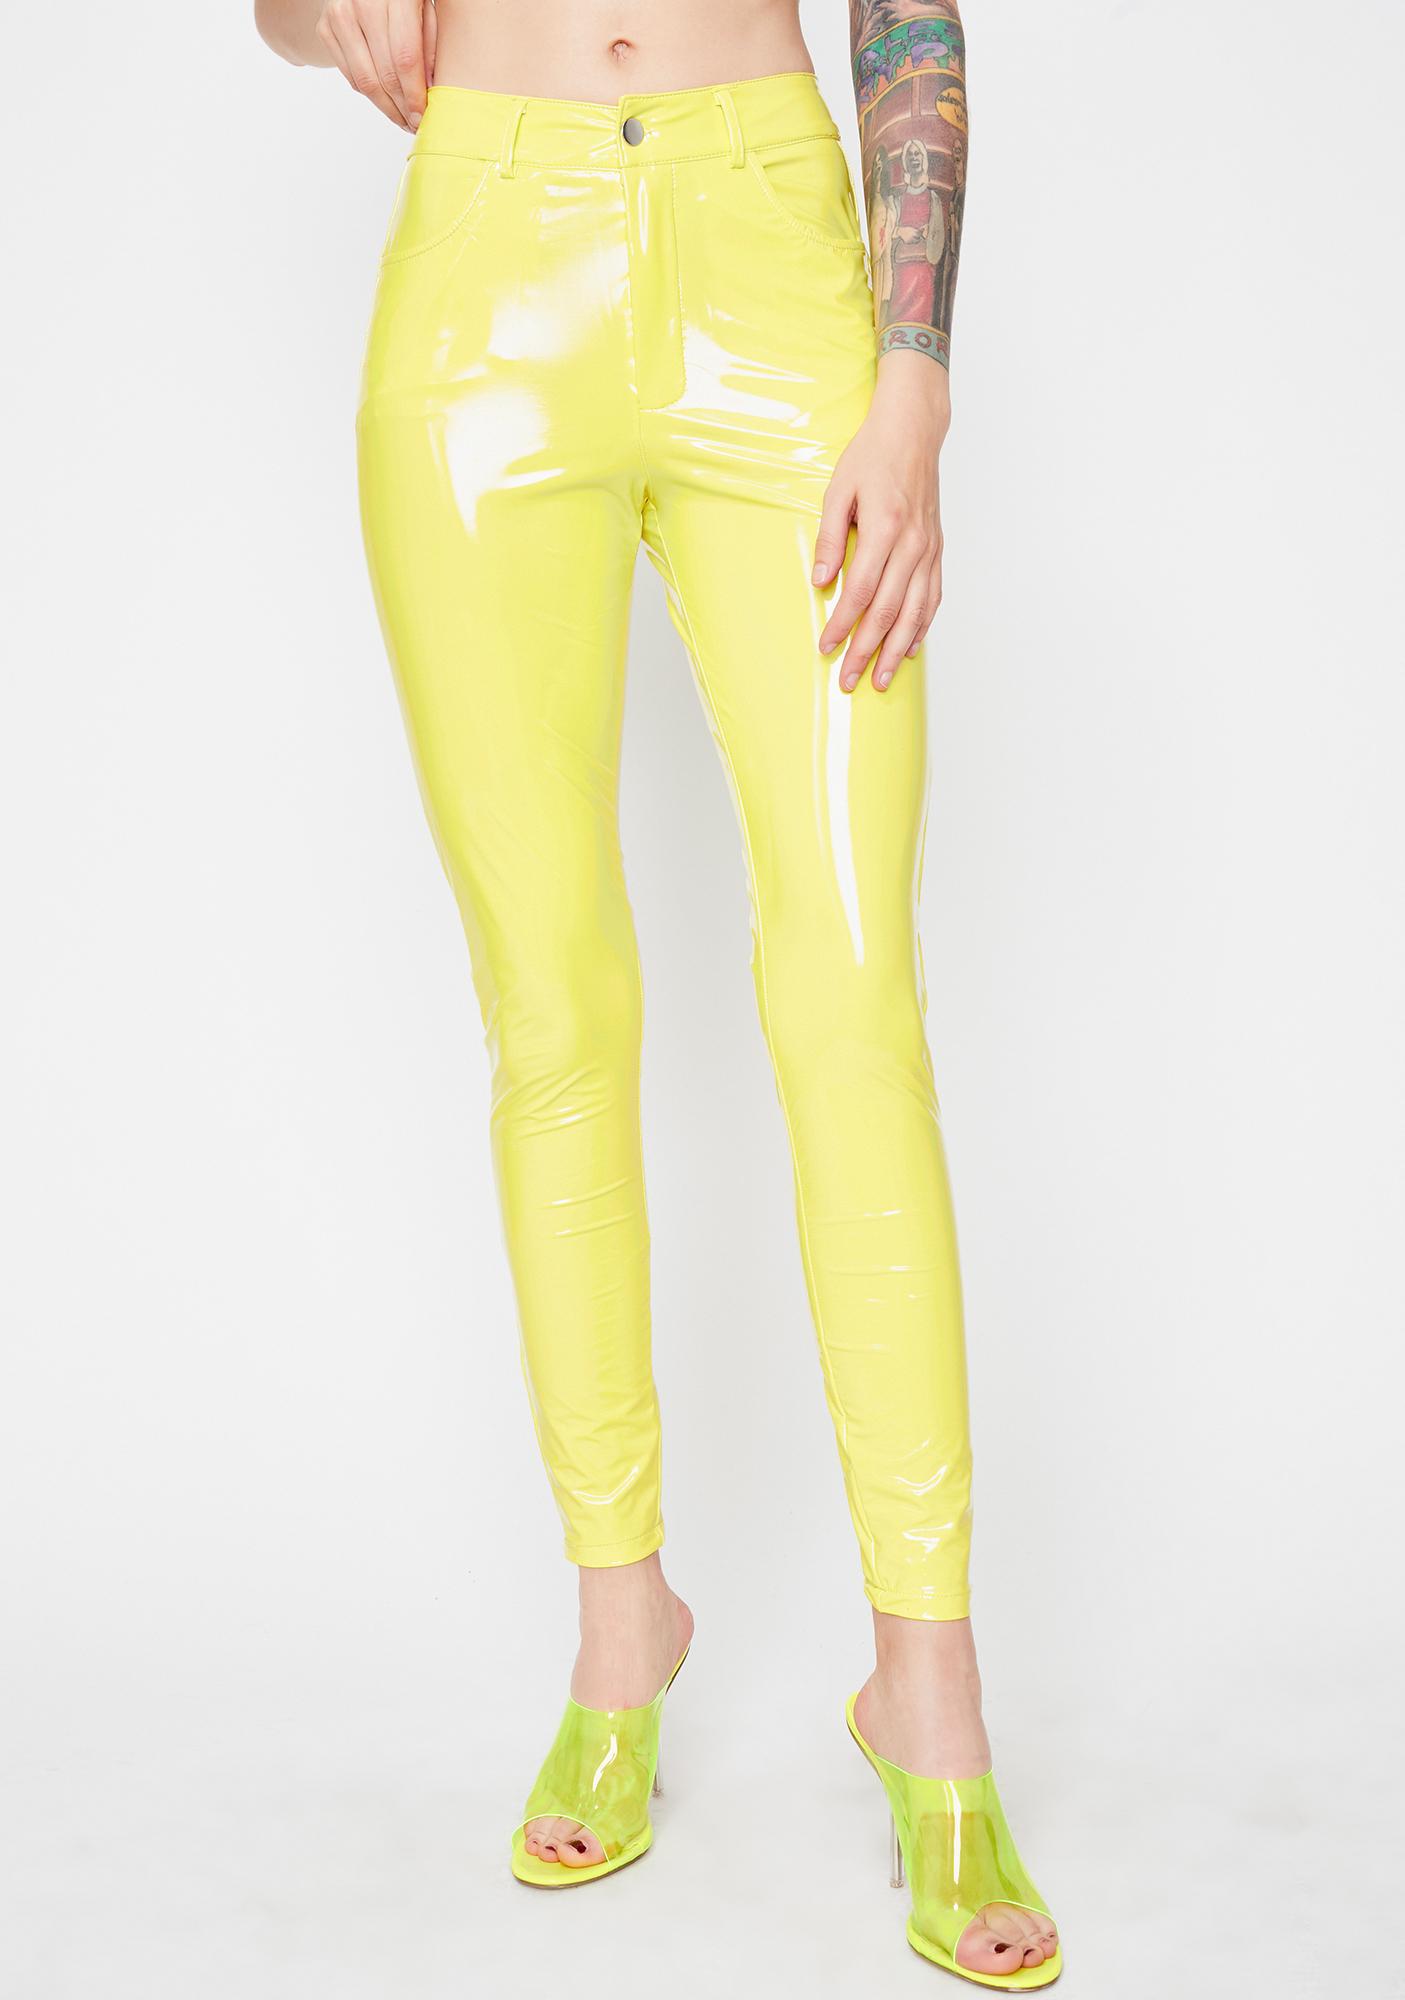 yellow skinny pants